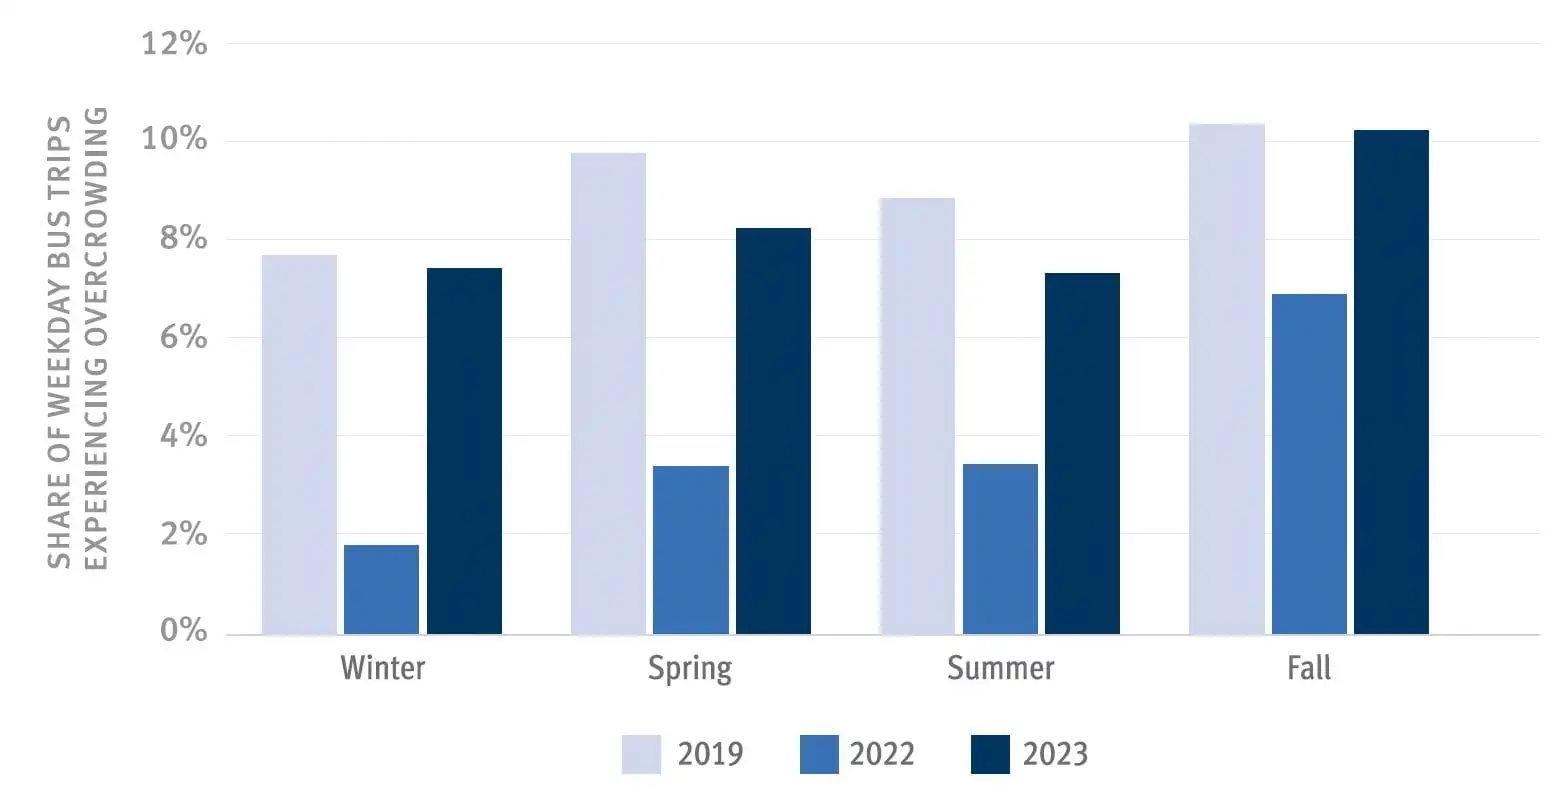 TransLink 2023 overcrowding by season